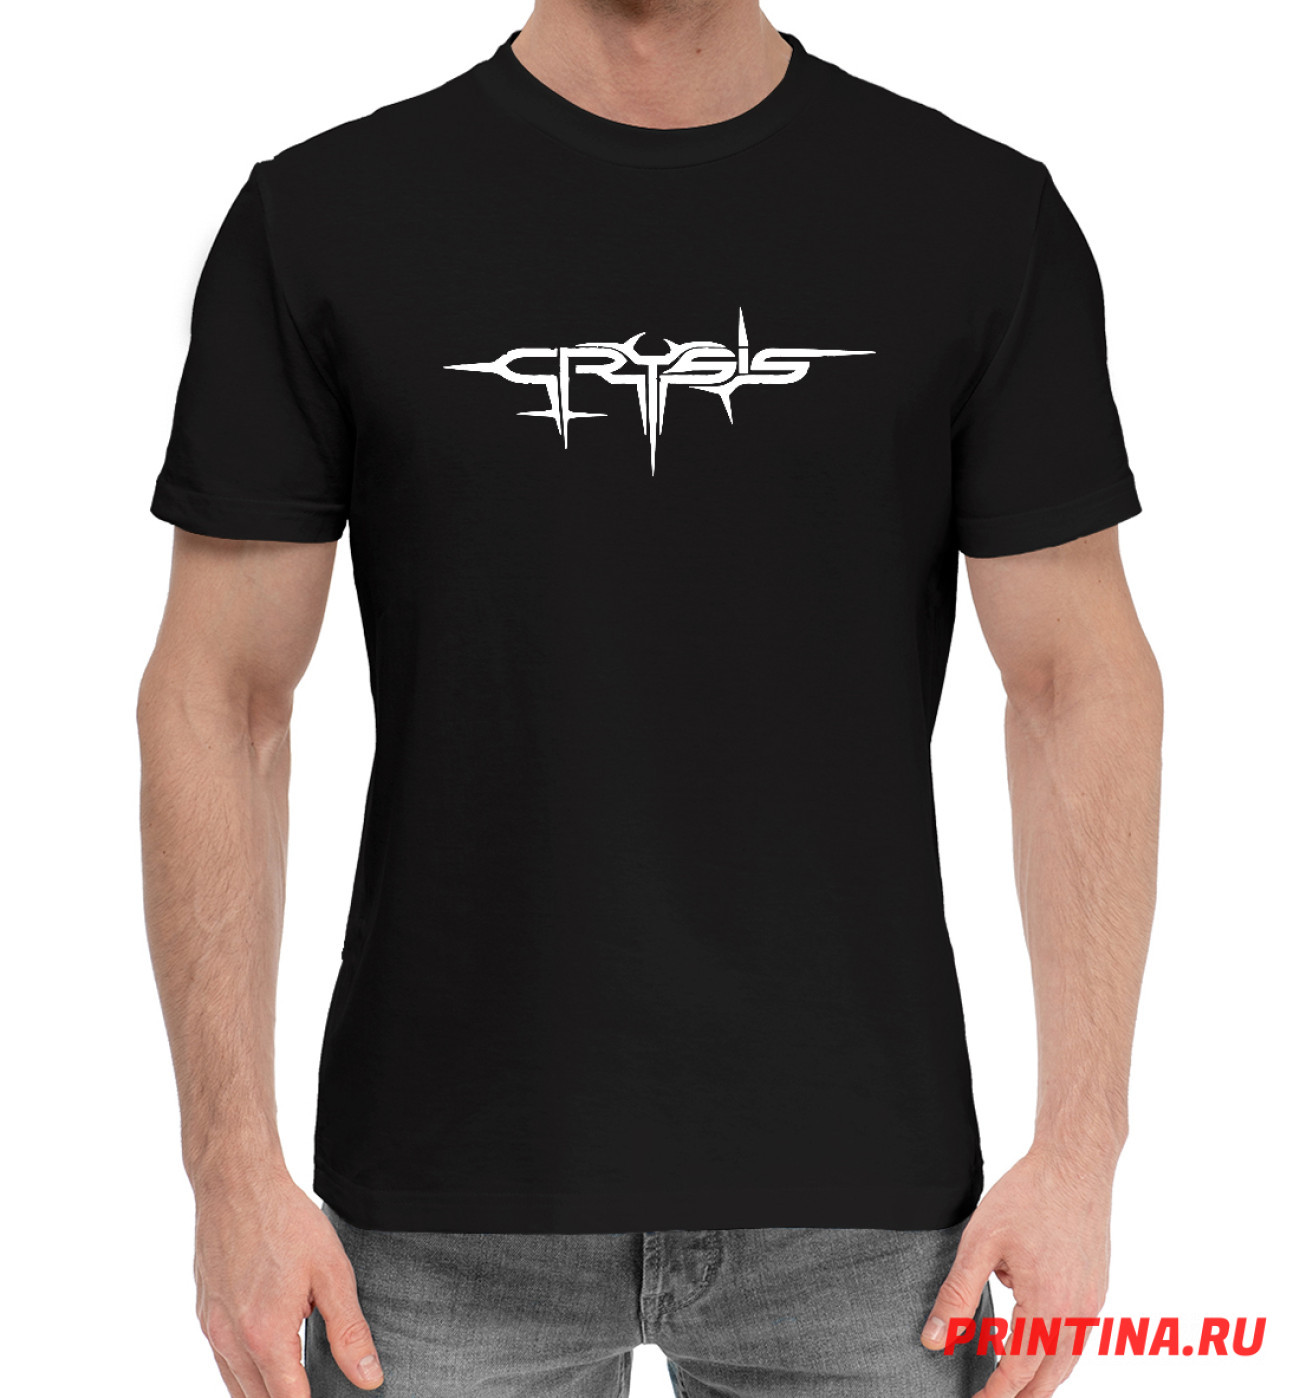 Мужская Хлопковая футболка Crysis, артикул: CRY-336602-hfu-2